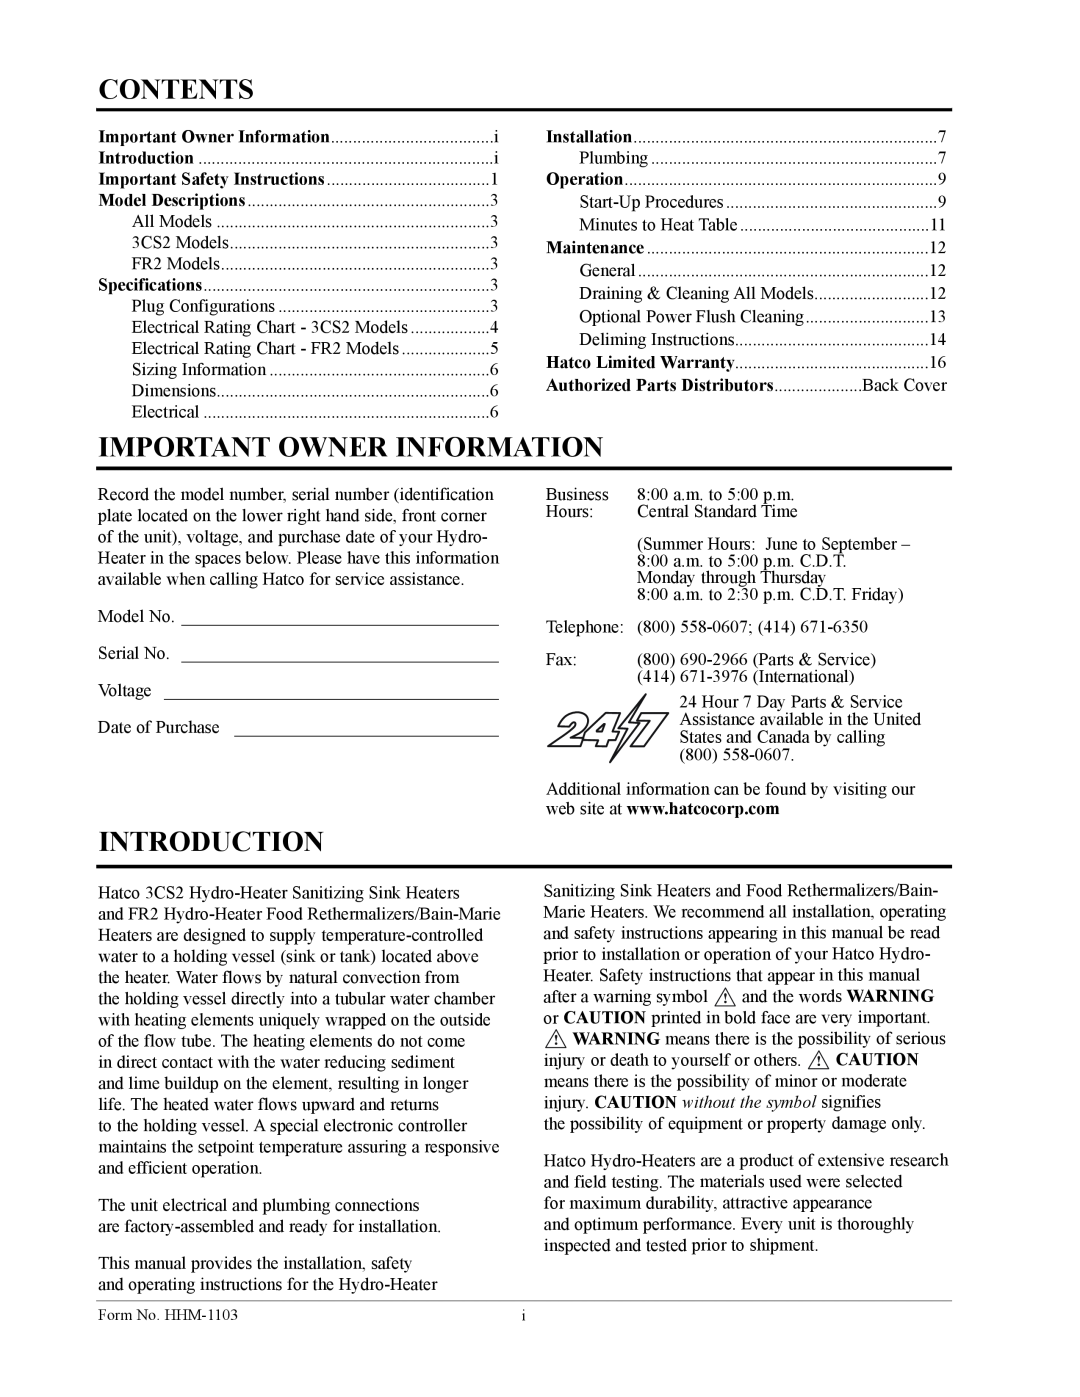 Hatco Hatco 3CS2 manual Contents, Important Owner Information, Introduction, Authorized Parts Distributors 